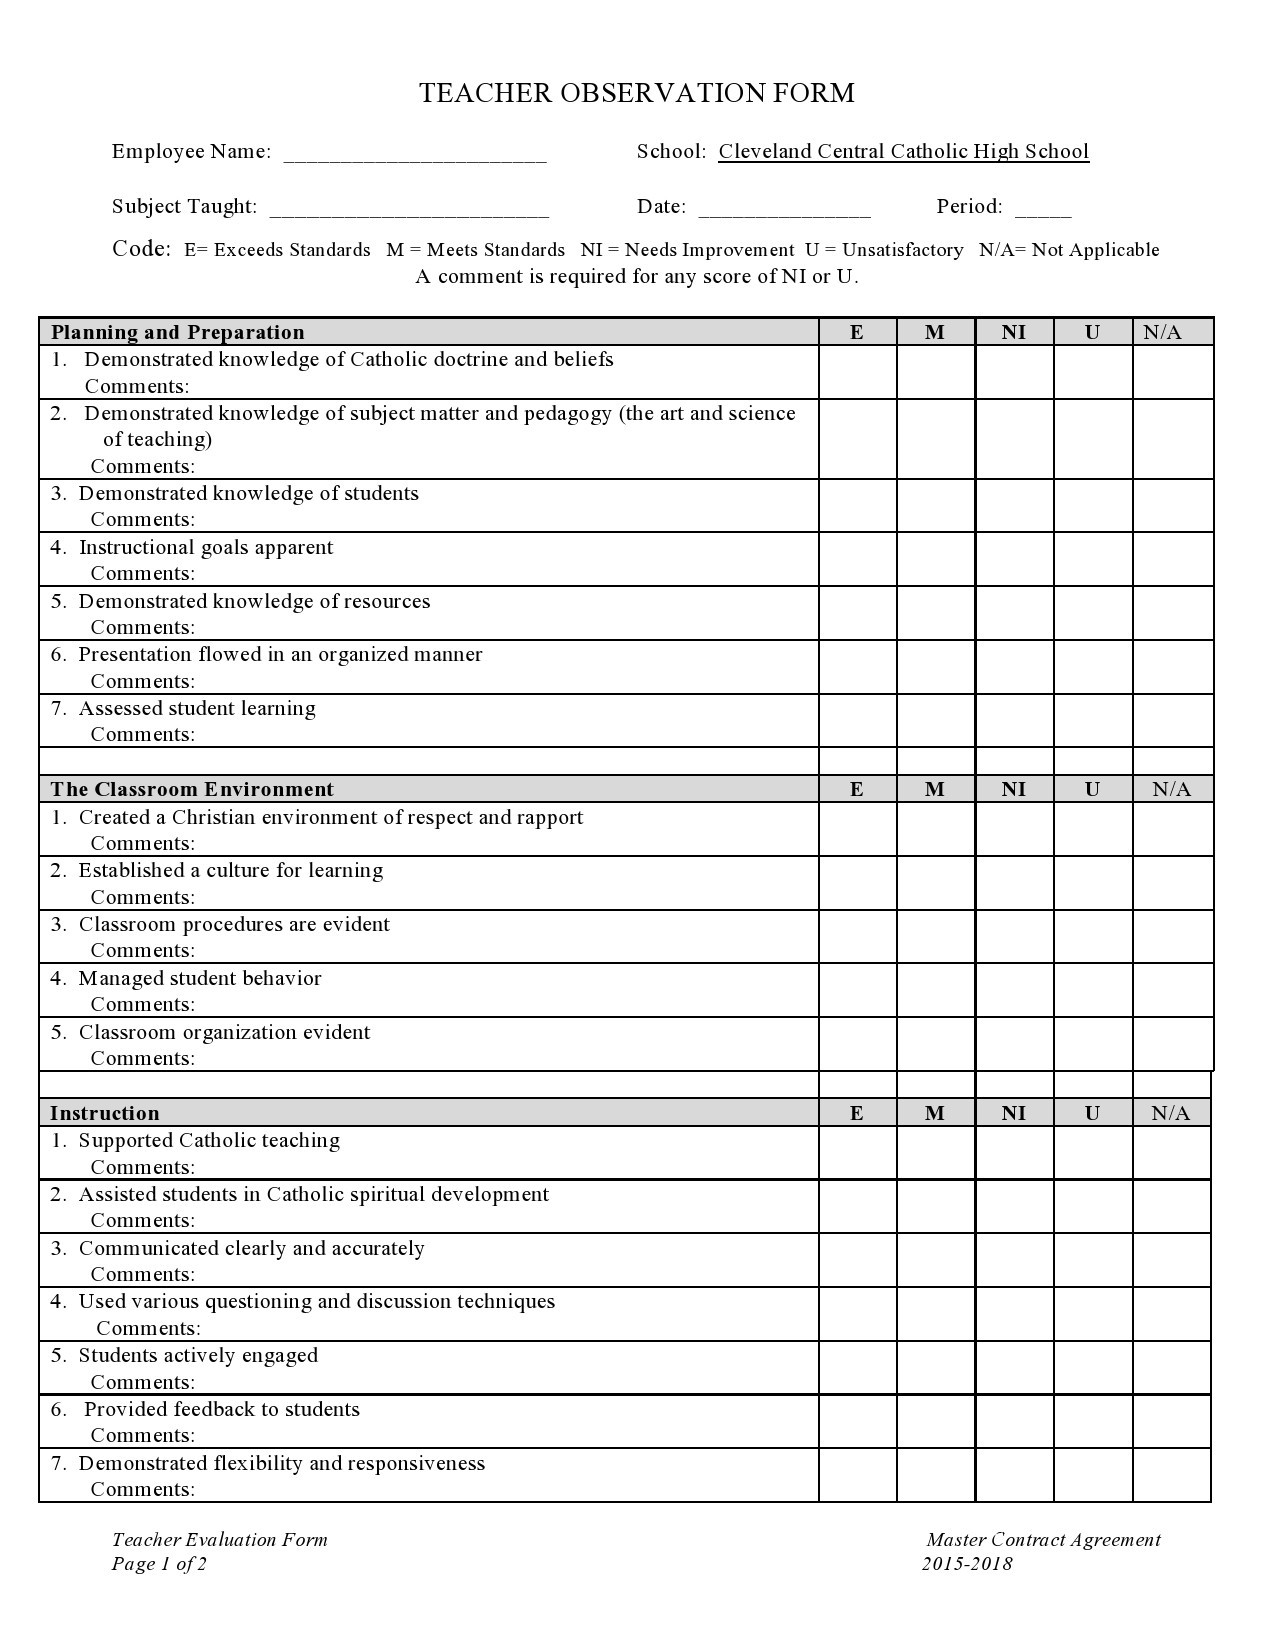 Free teacher evaluation form 46